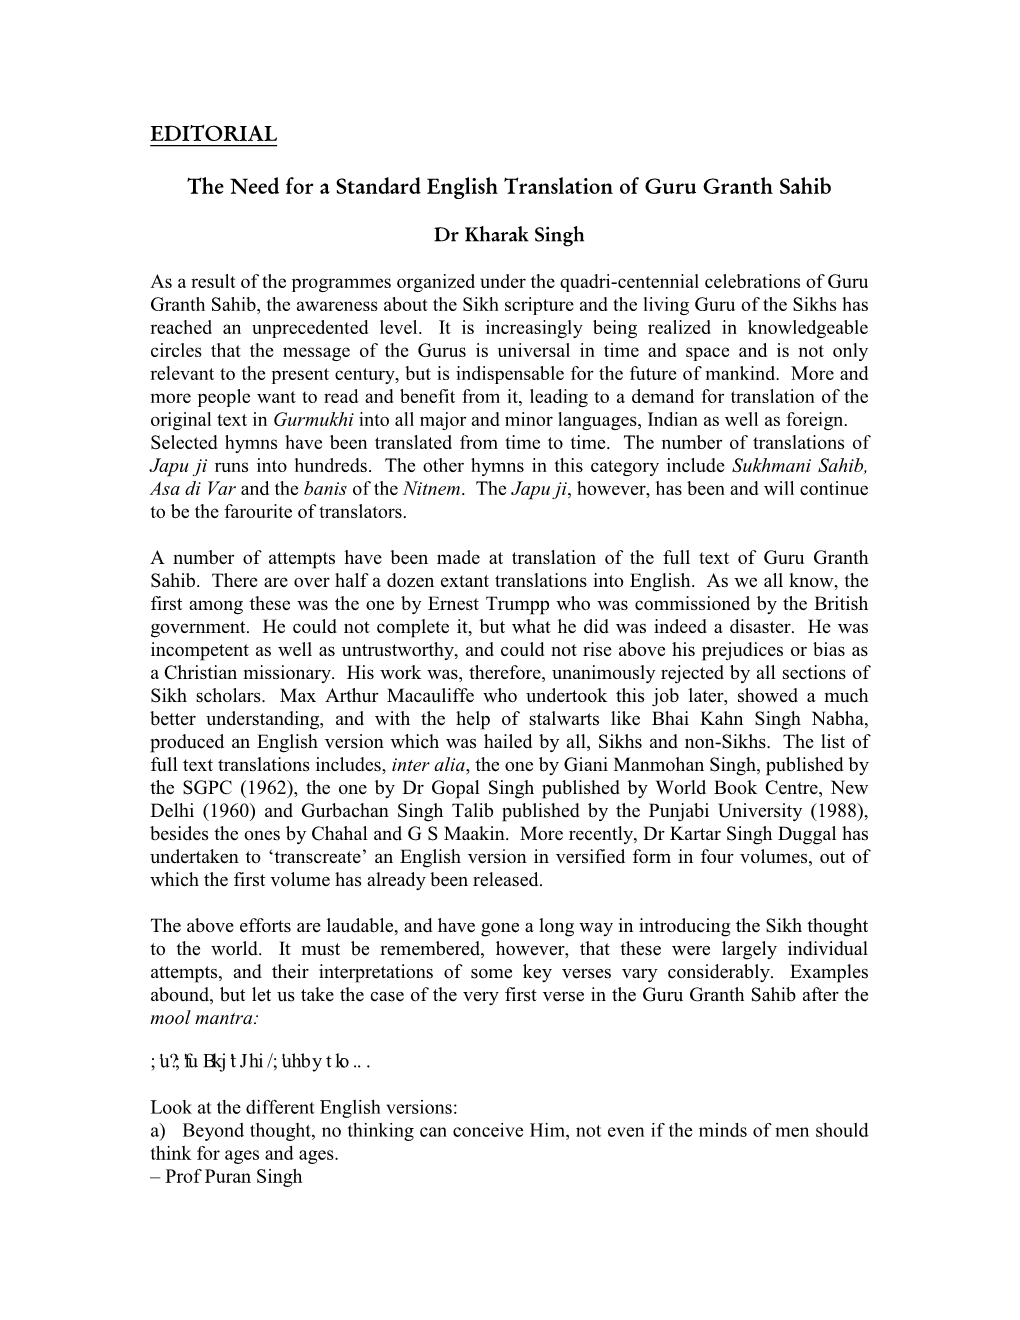 The Need for a Standard English Translation of Guru Granth Sahib